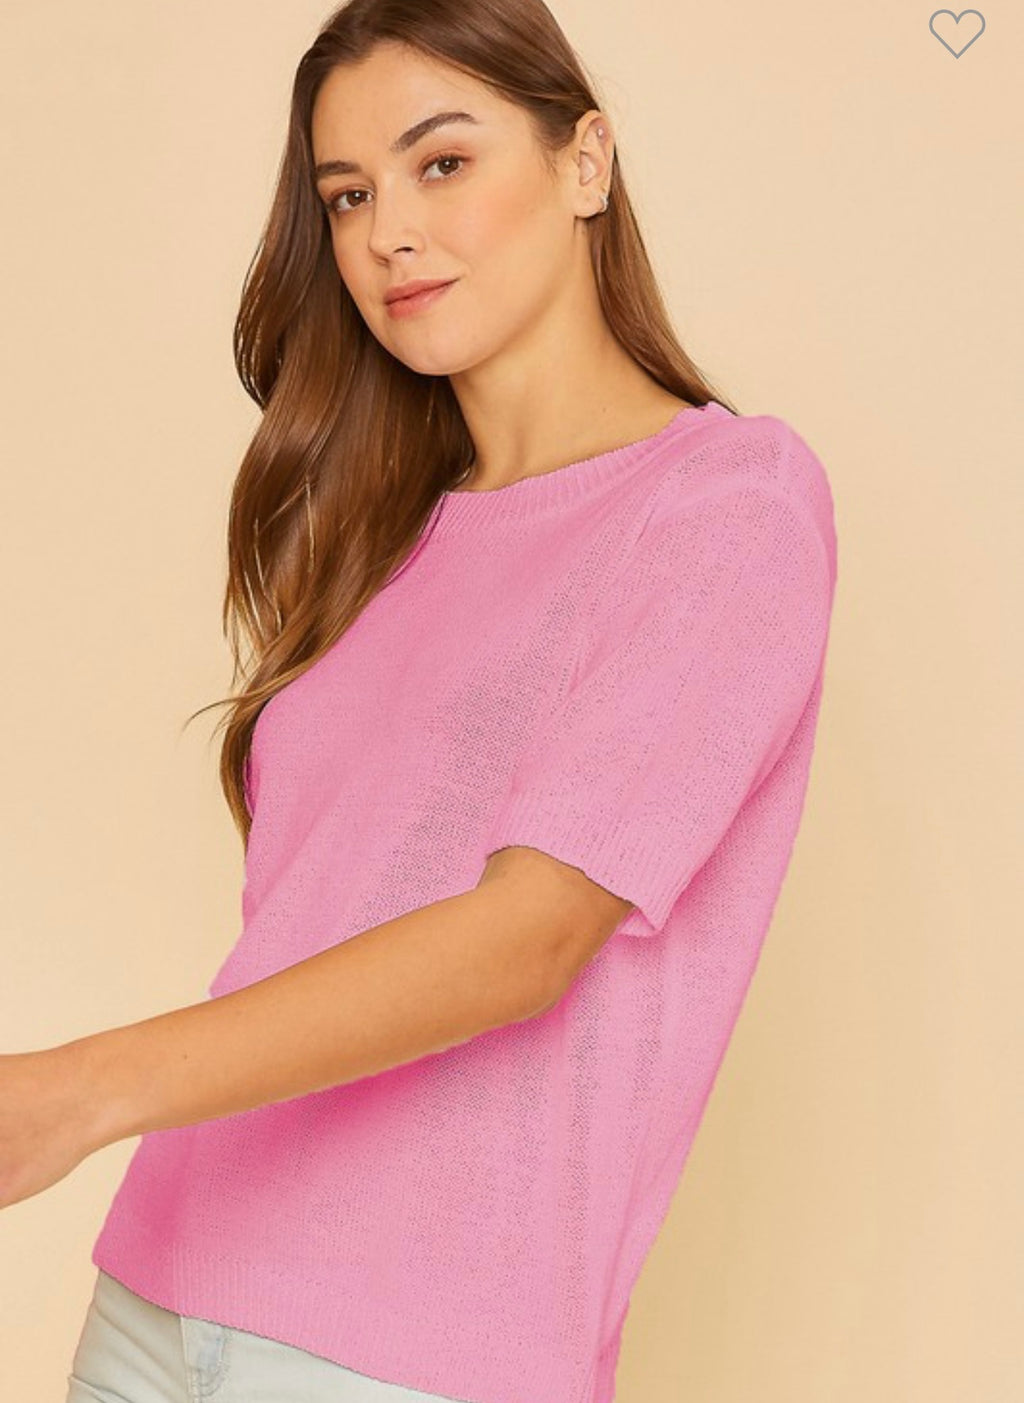 Lightweight Pink Sweater